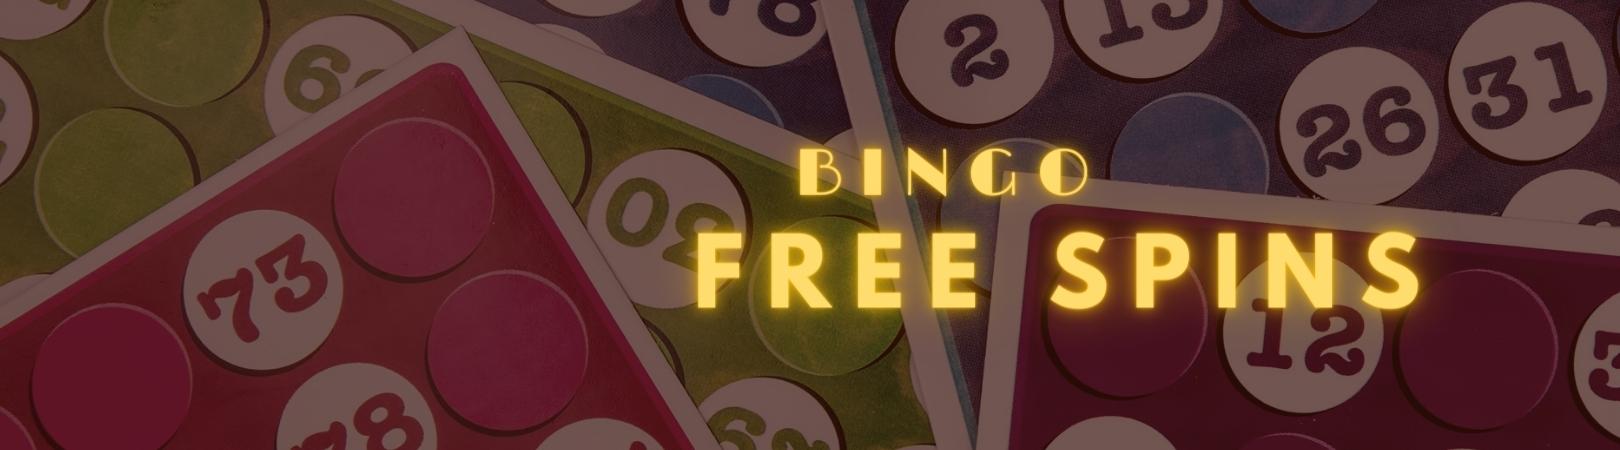 Bingo free spins img